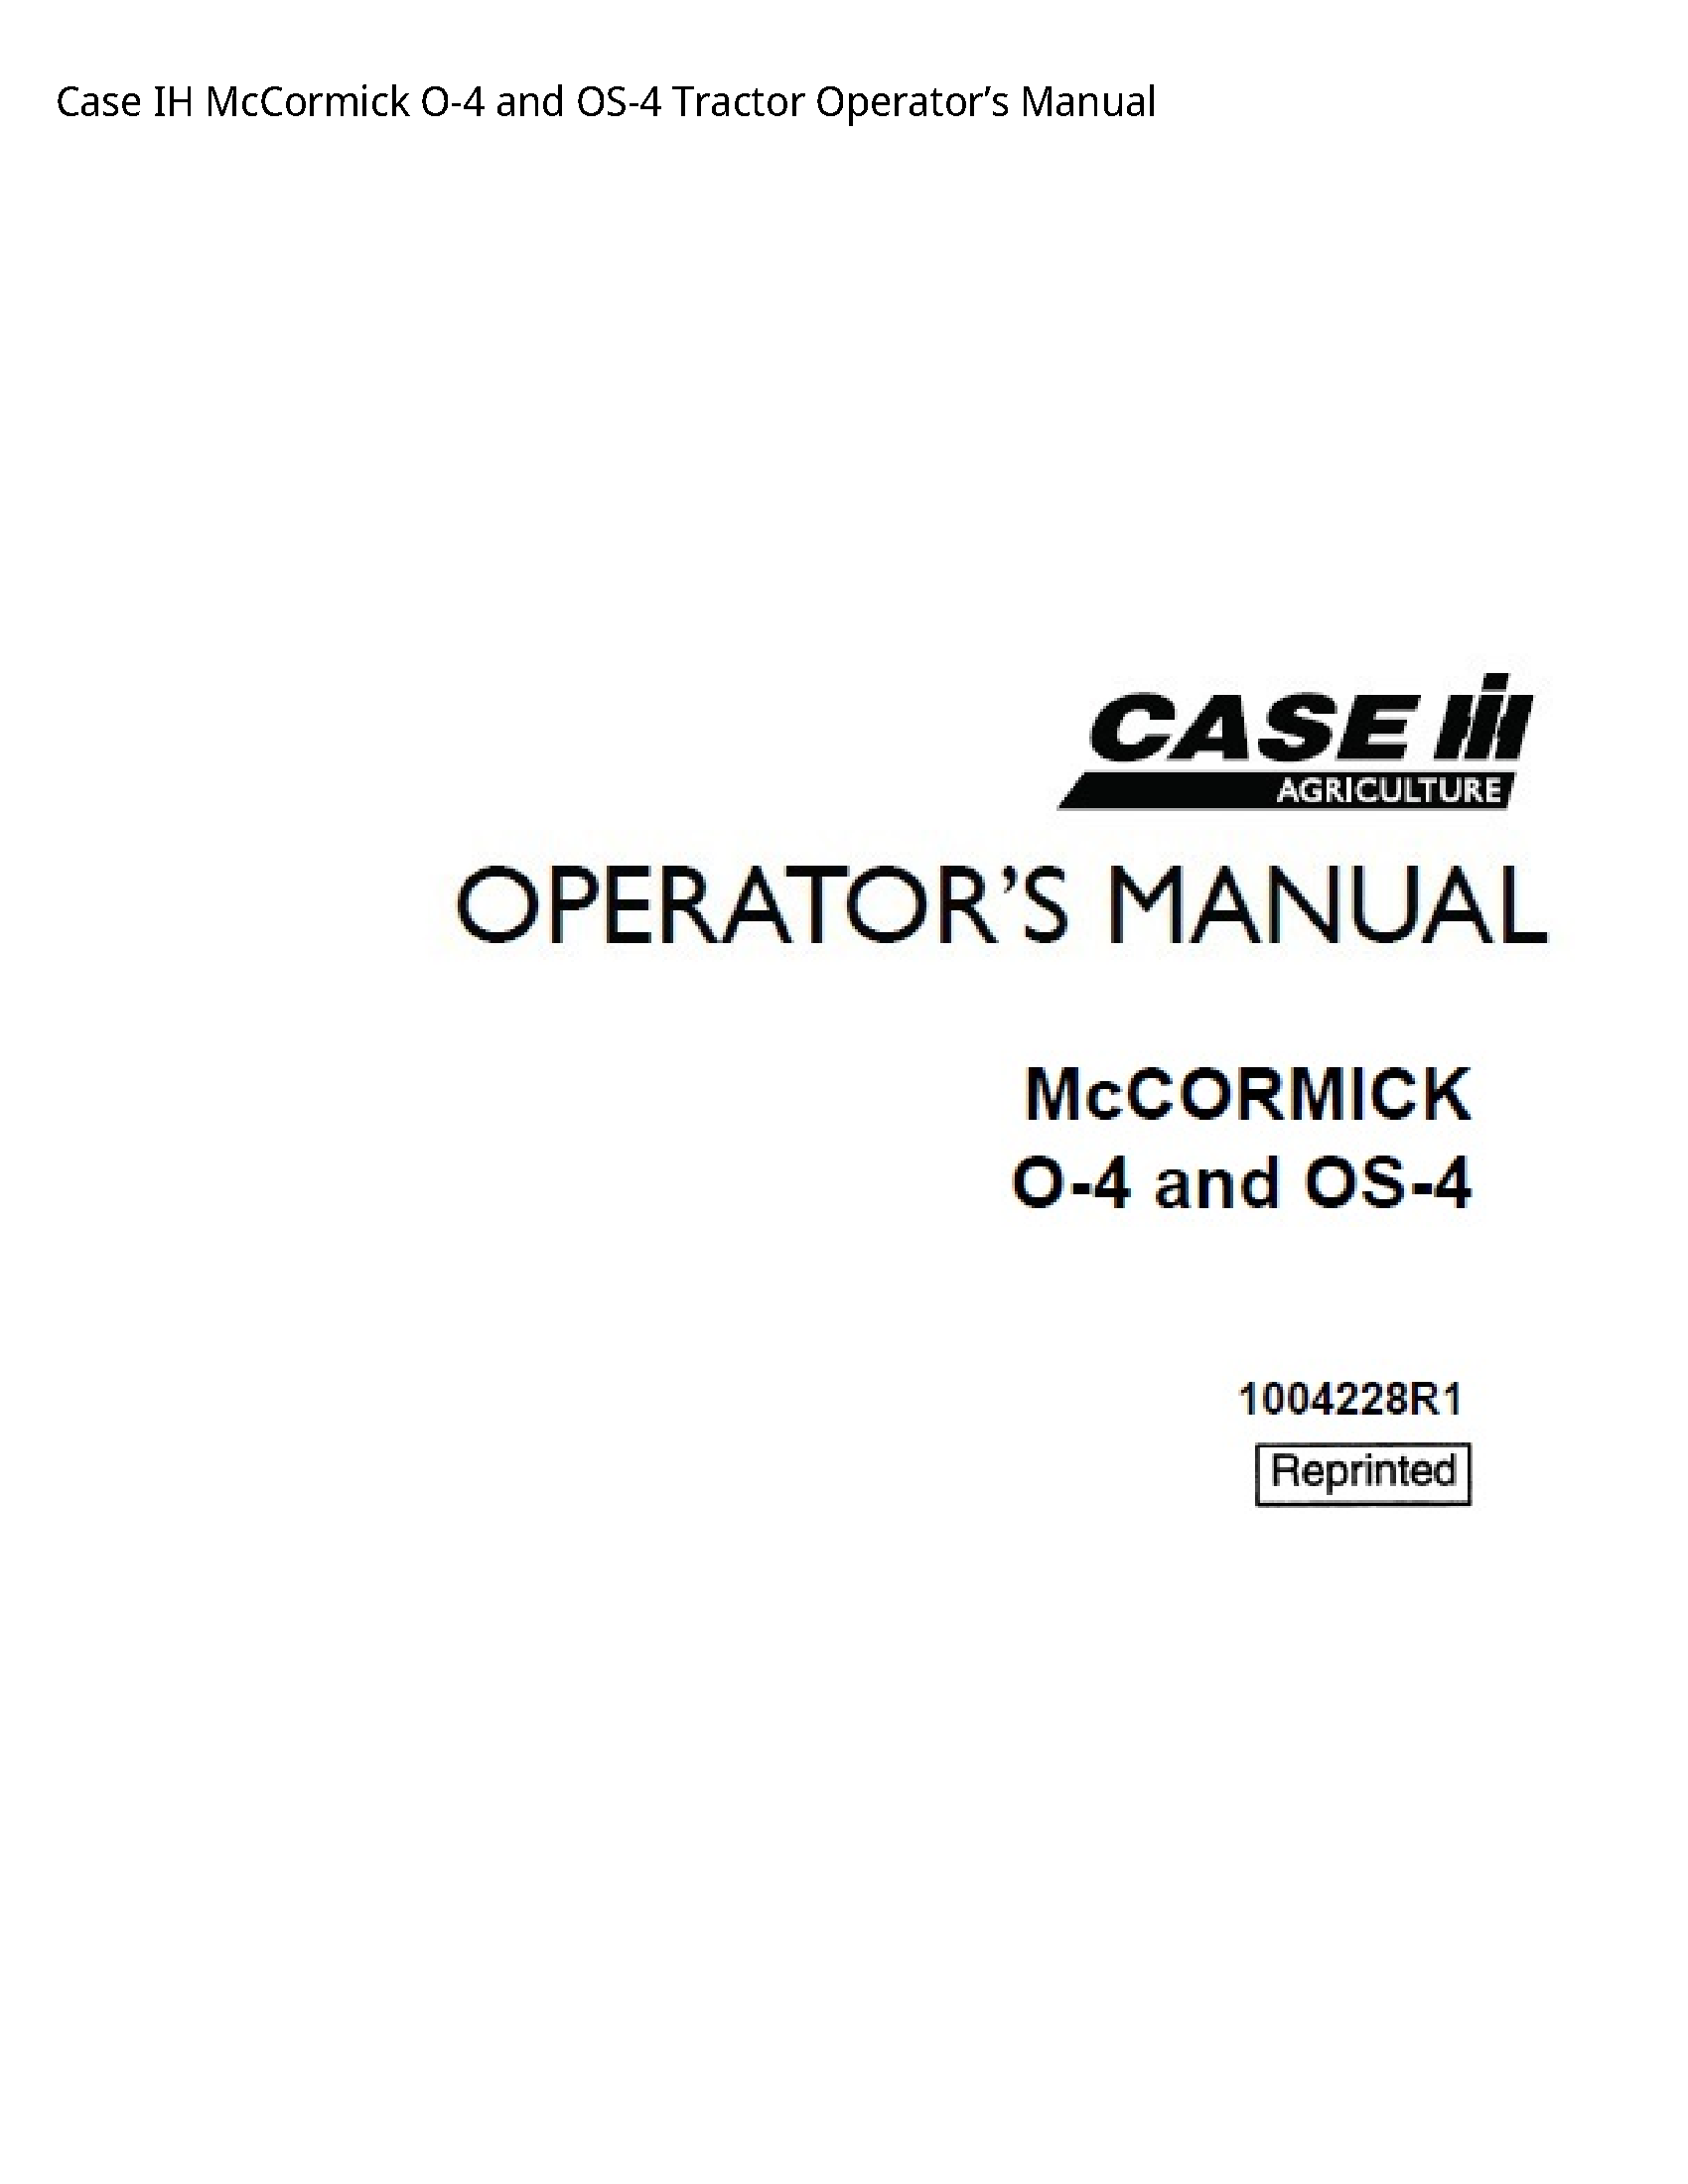 Case/Case IH O-4 IH McCormick  Tractor Operator’s manual